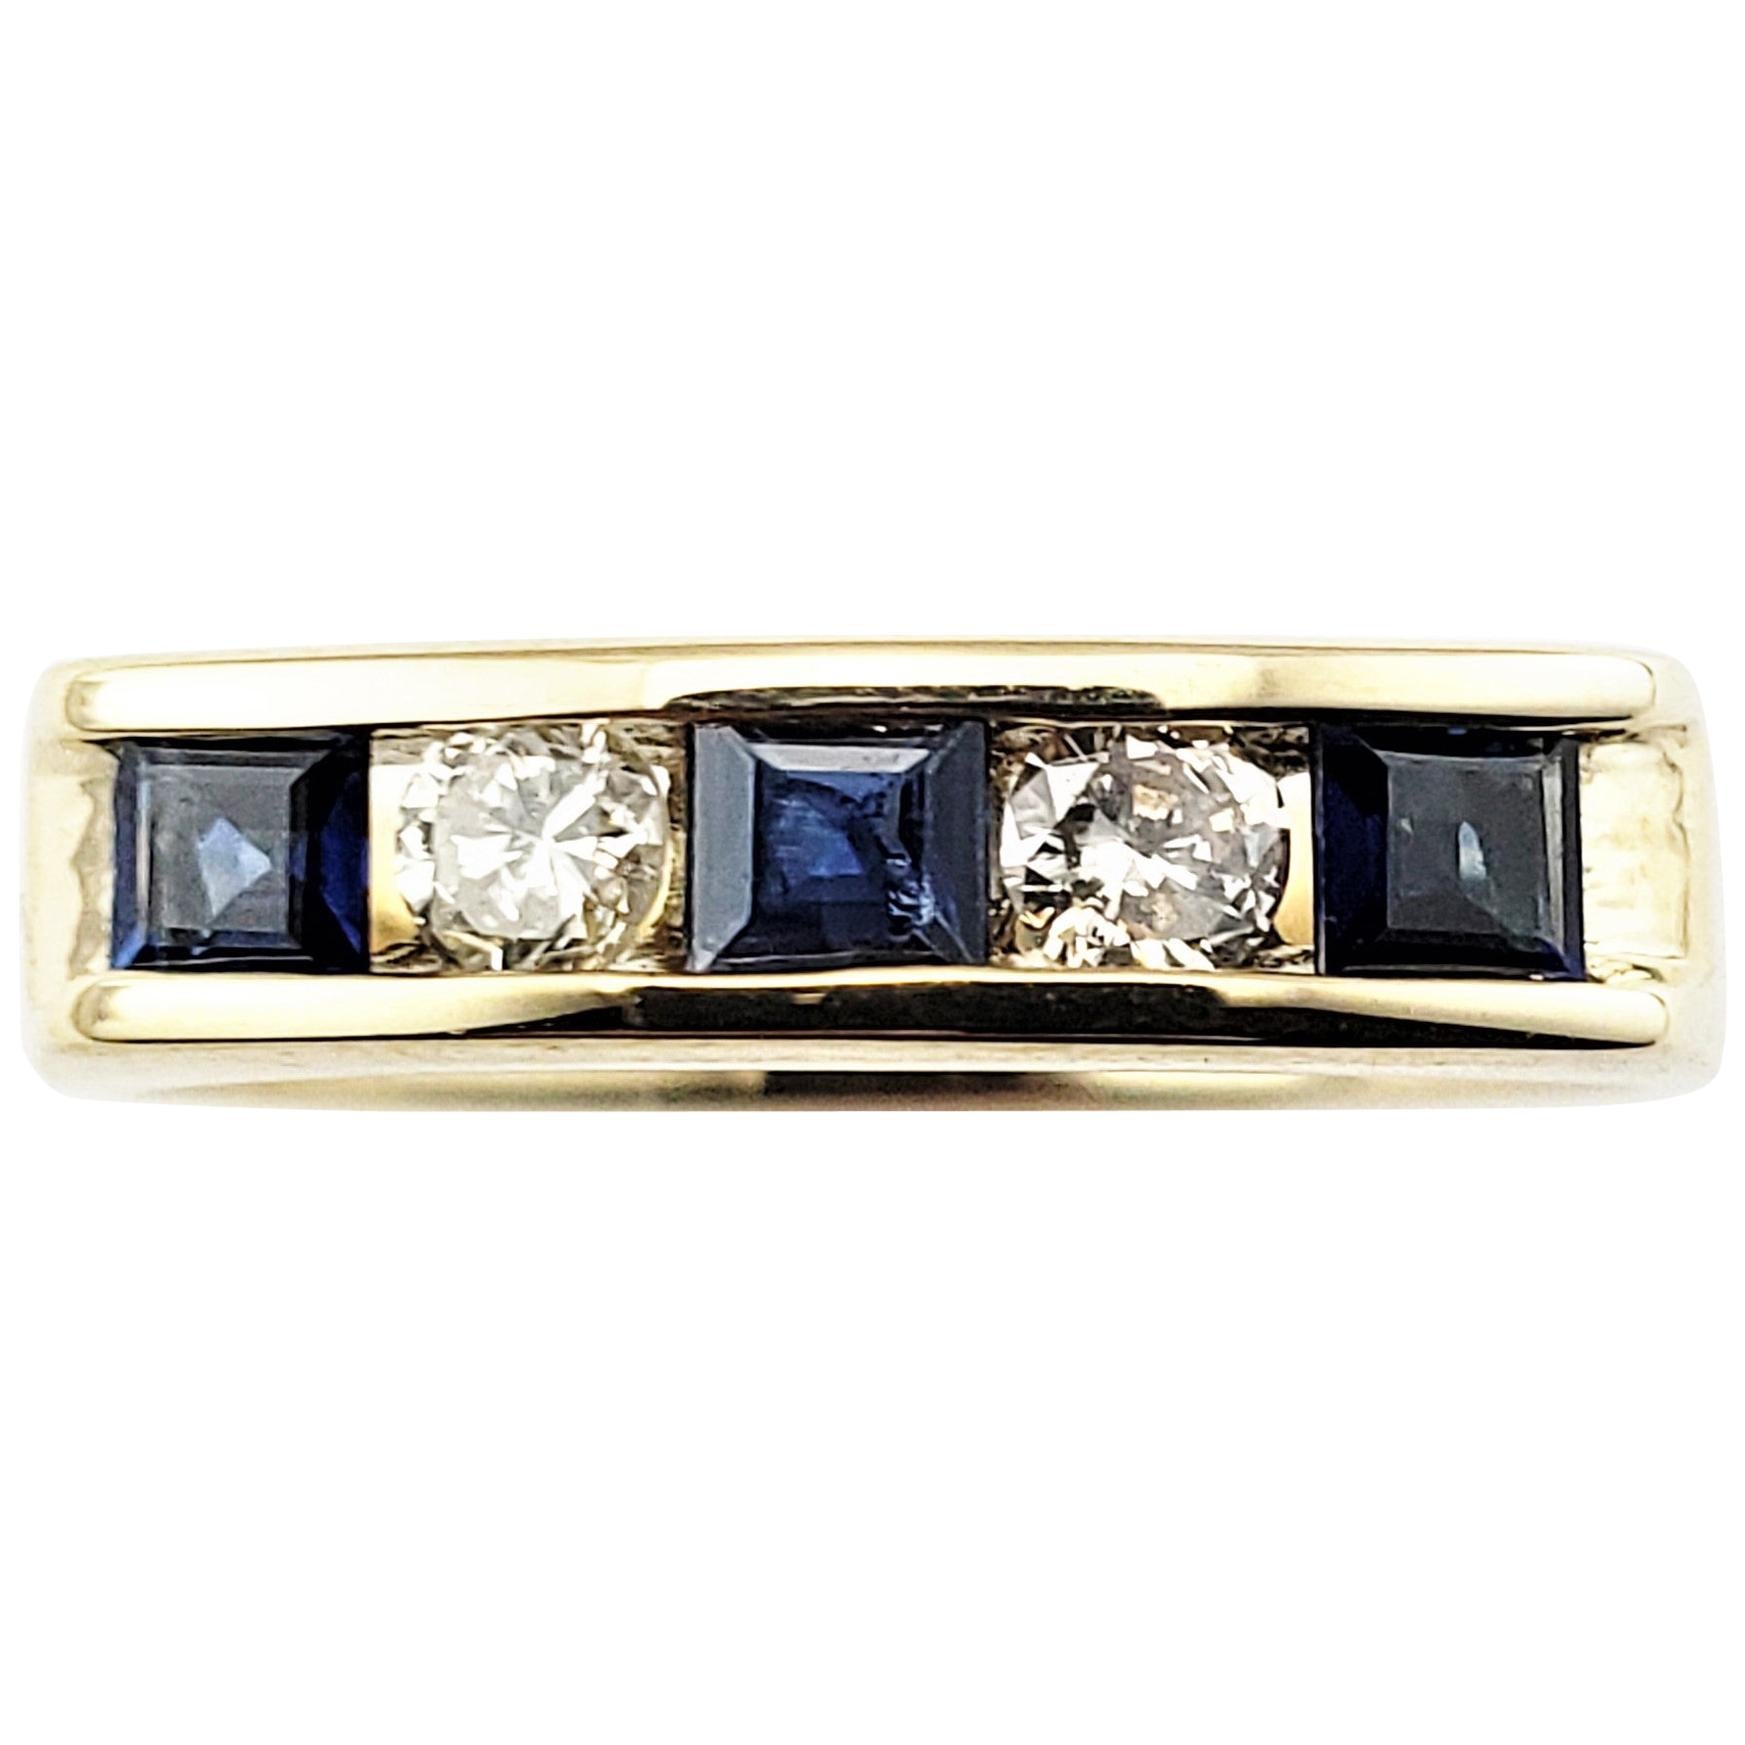 14 Karat Yellow Gold Sapphire and Diamond Ring